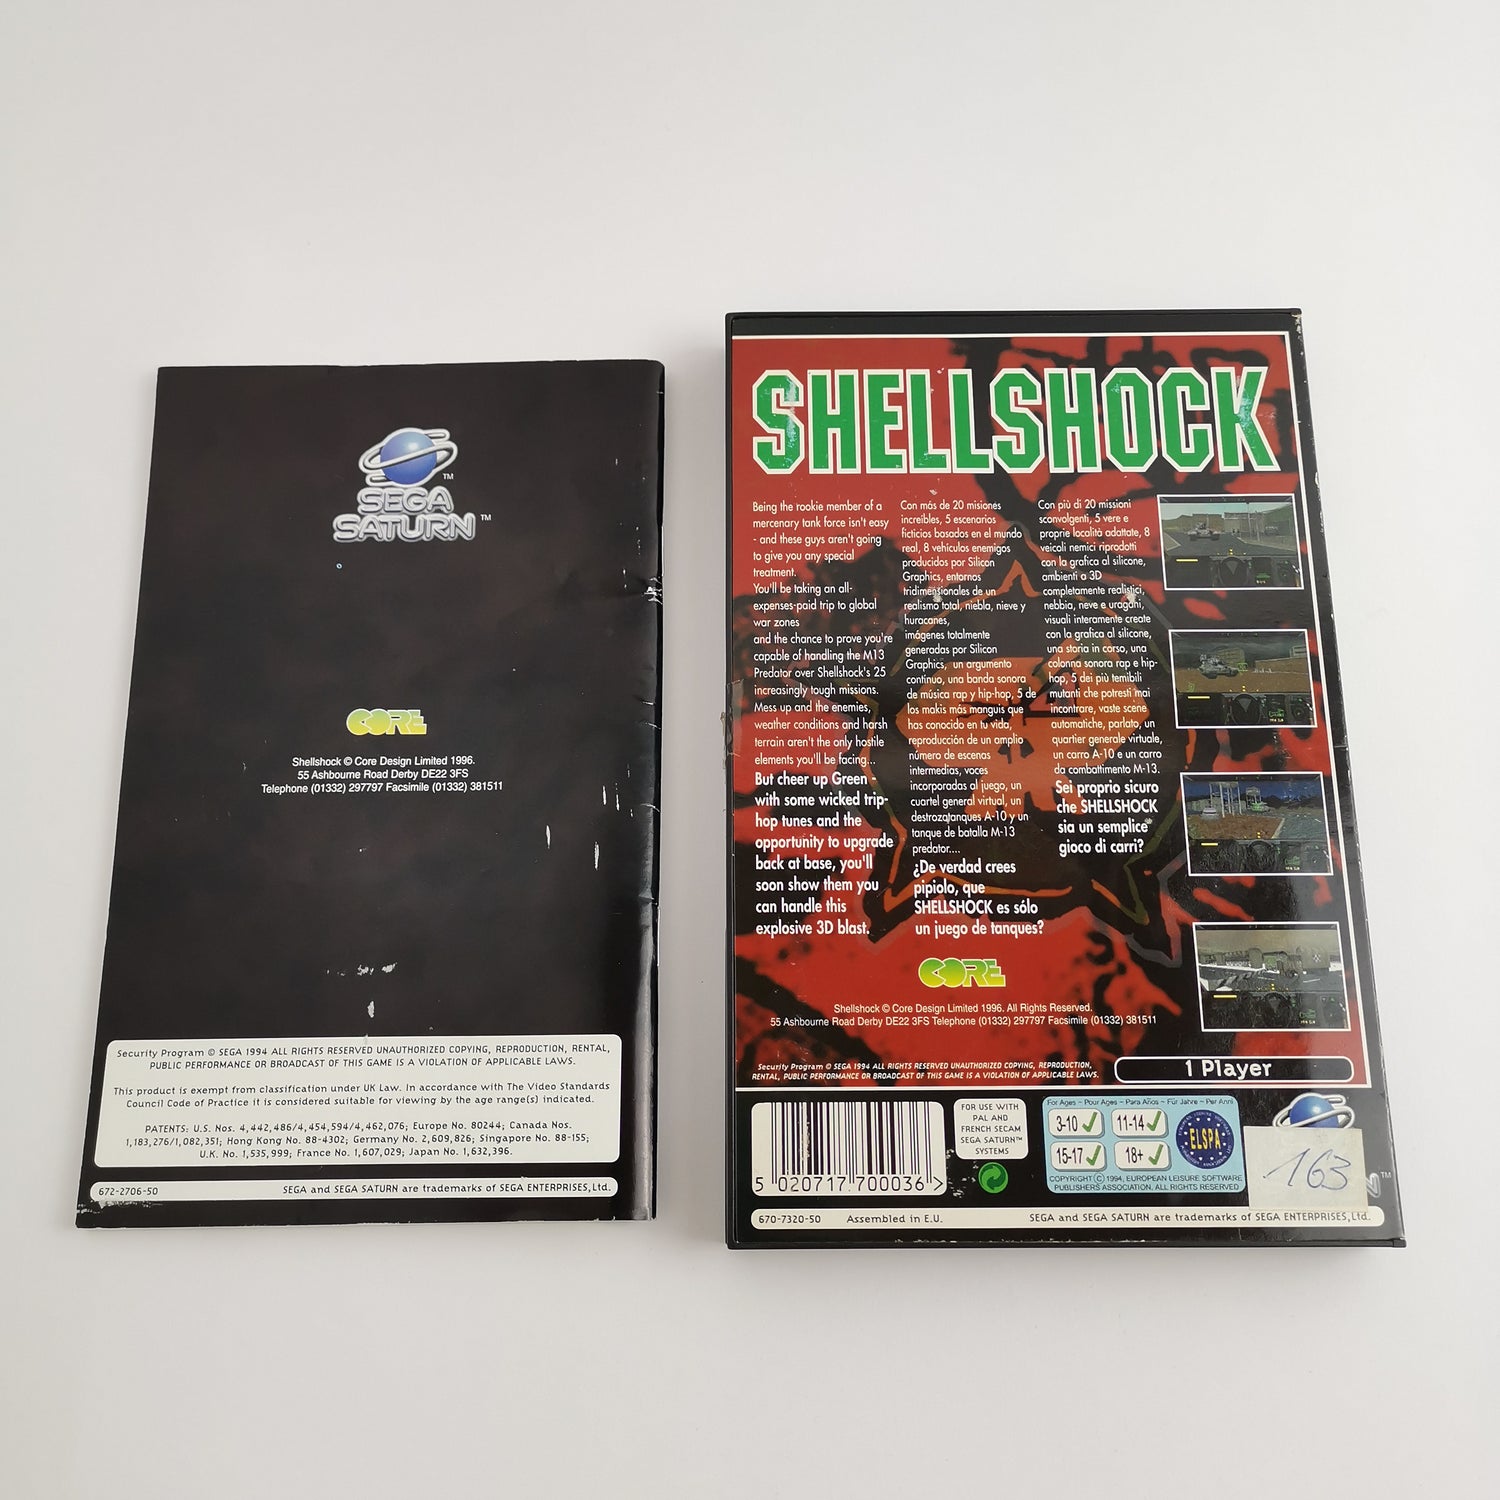 Sega Saturn game: Shellshock in original packaging & instructions - Core | PAL version